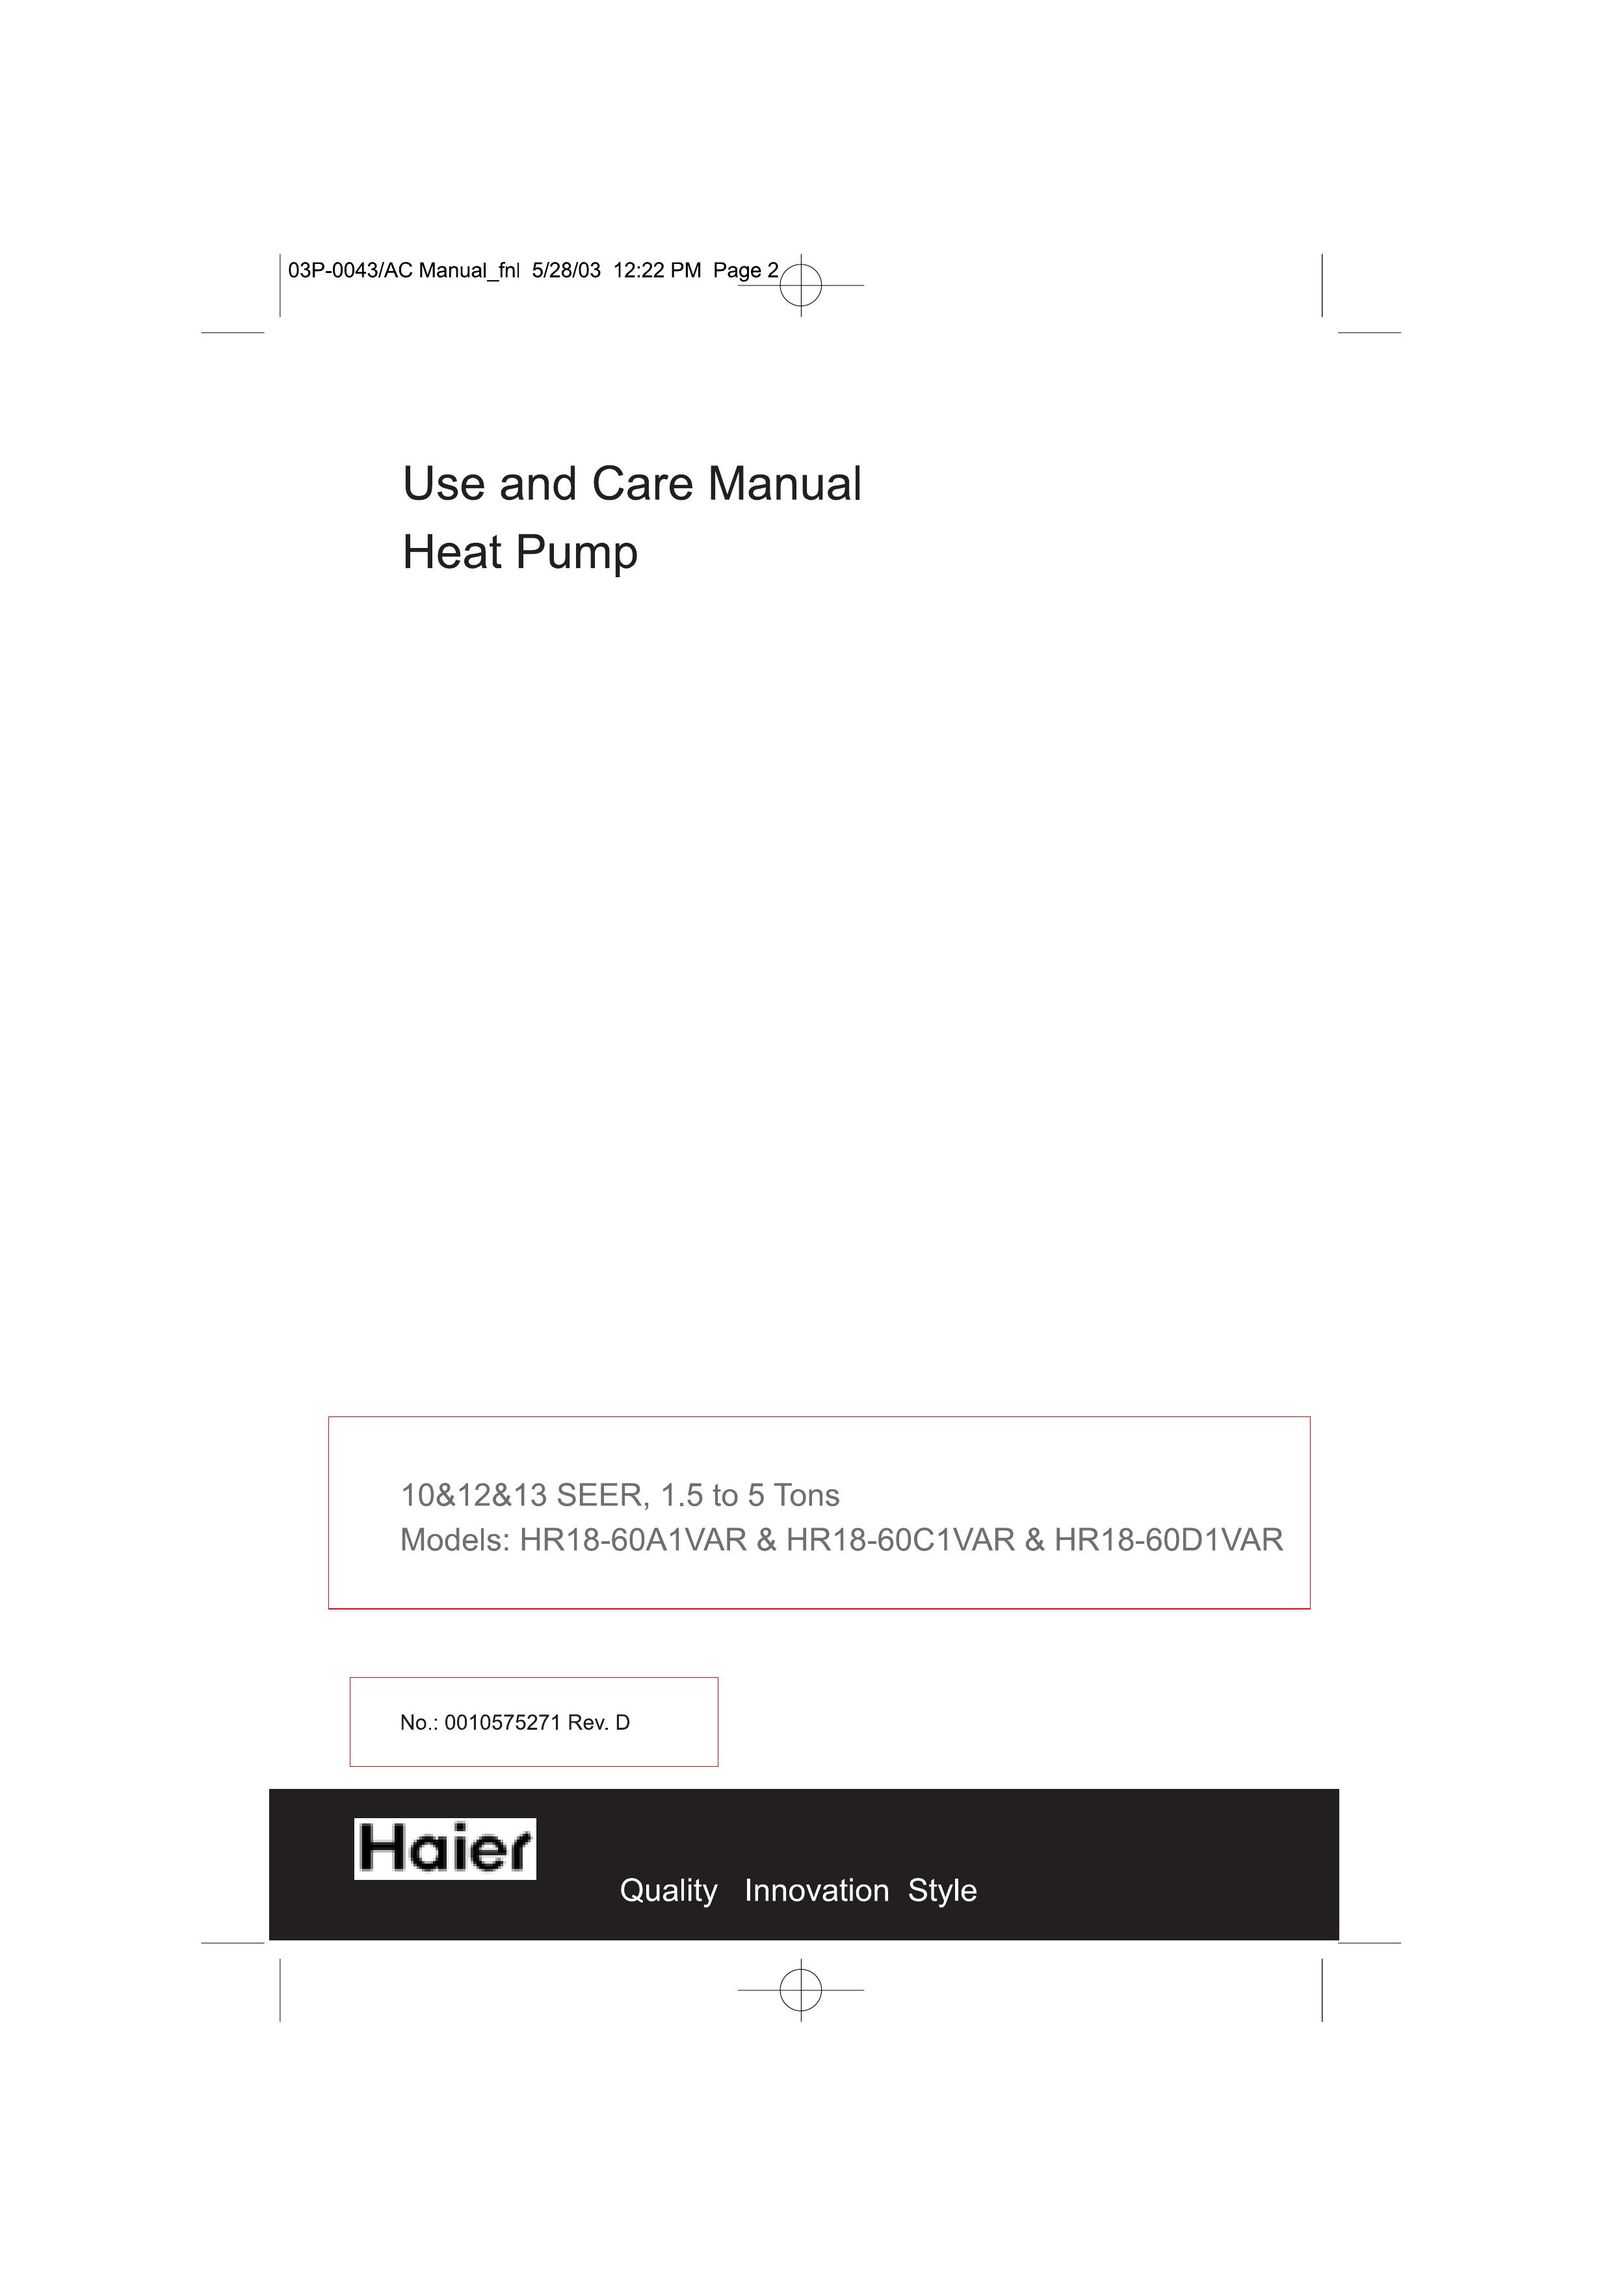 Haier HR18-60D1VAR. Heat Pump User Manual